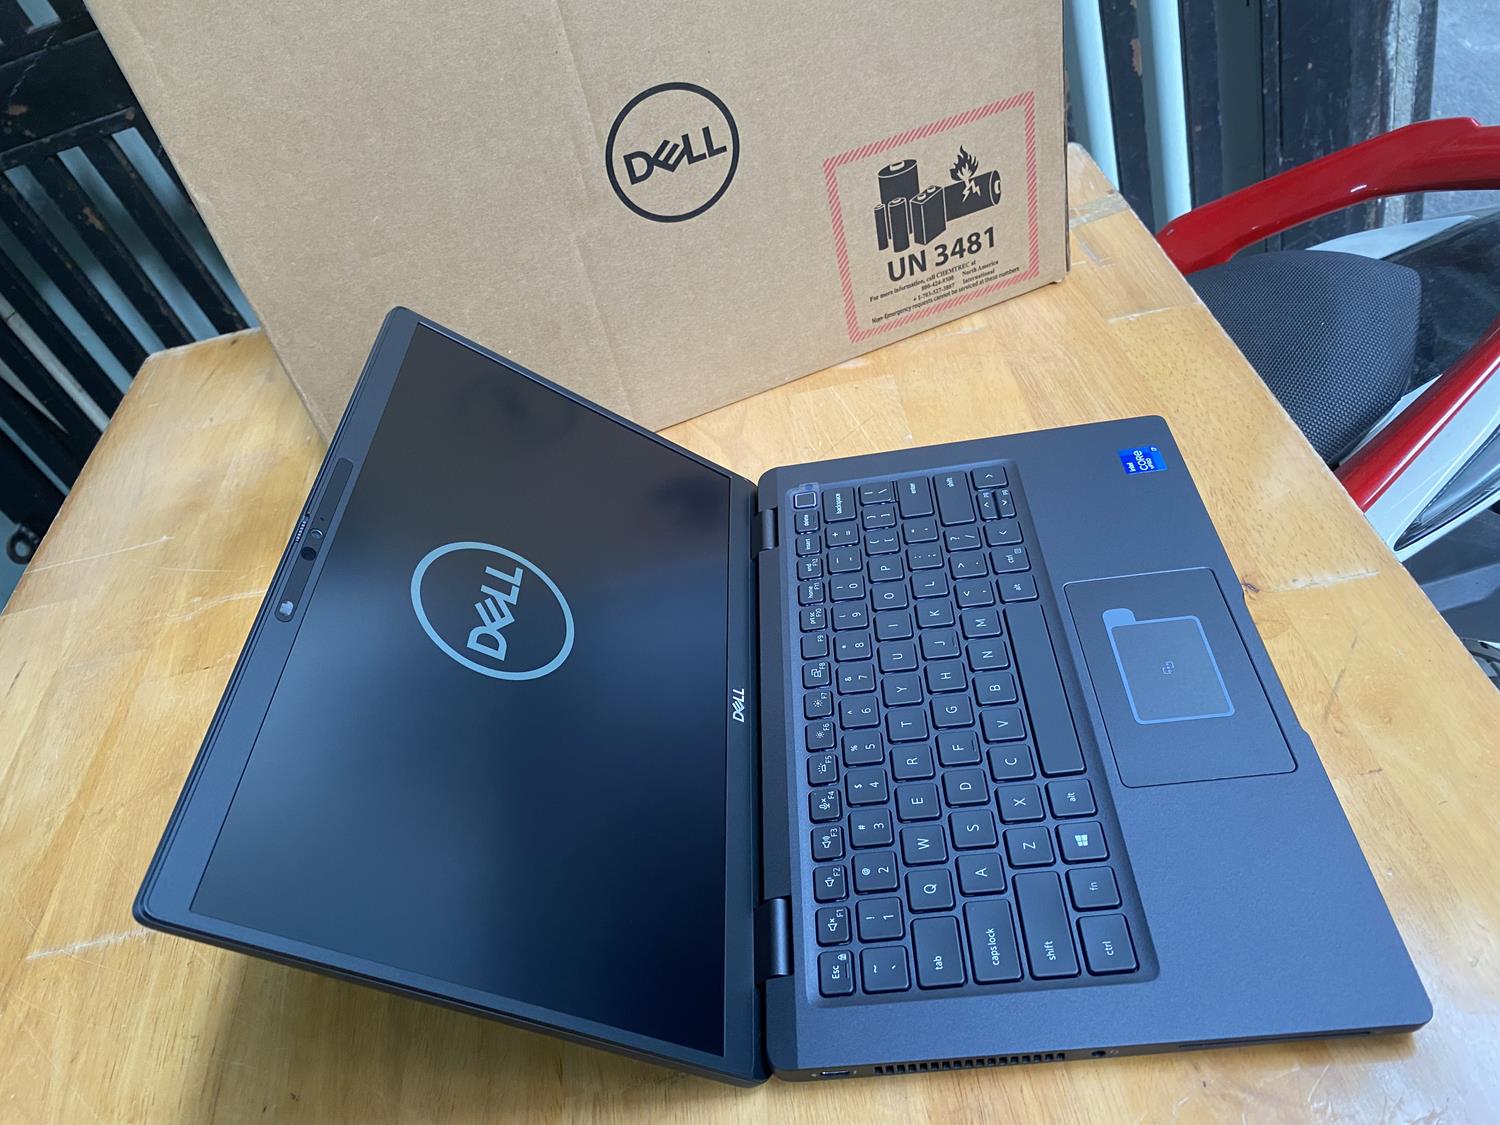 Dell Latitude 7320 Core i7 (4) - laptop cũ giá rẻ